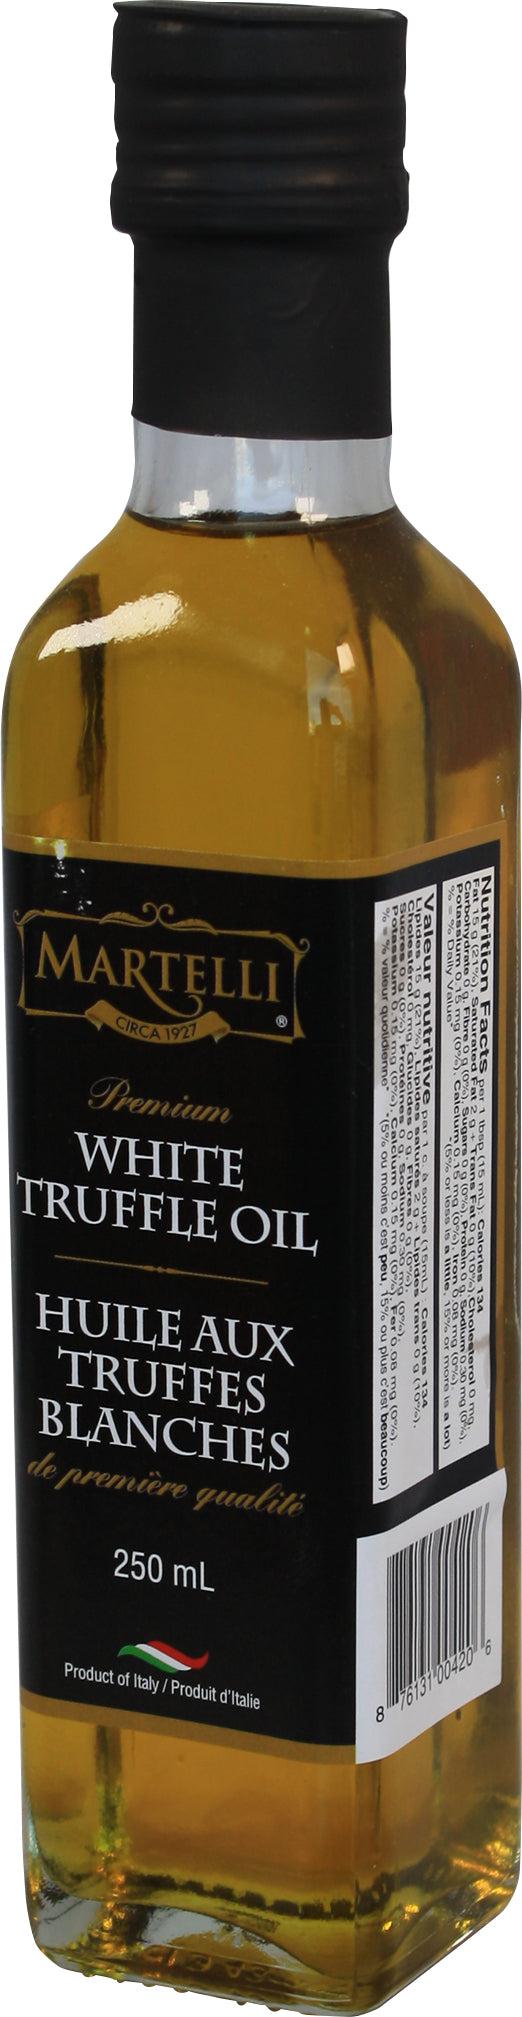 Martelli - White Truffle Oil